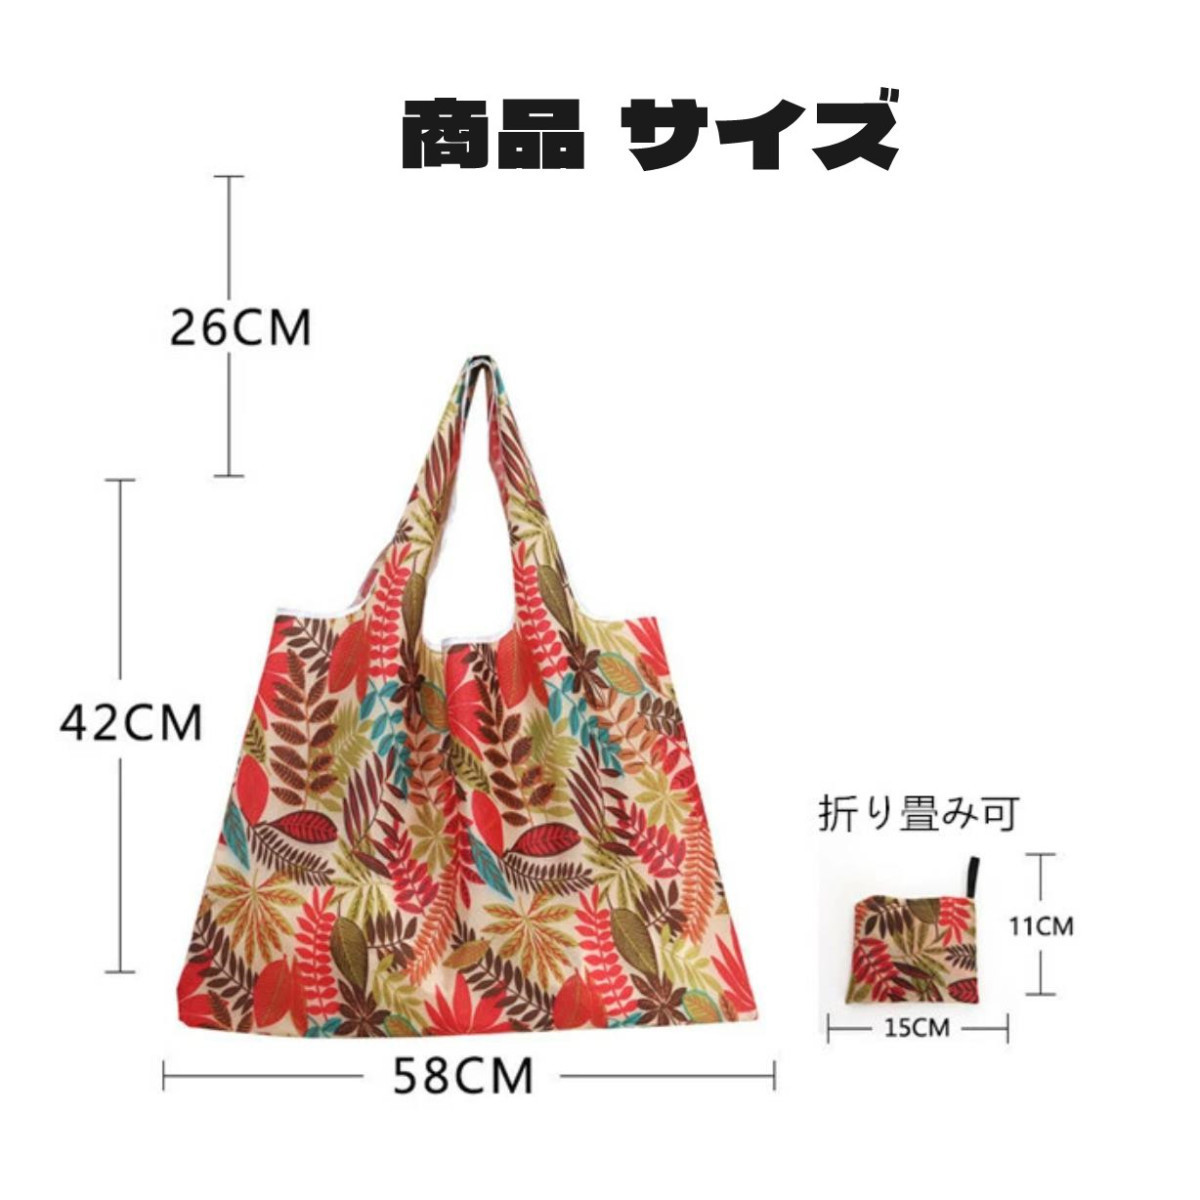  folding eko-bag L size shopping back shopping bag tote bag carrier bags compact sub bag bag light weight convenience 